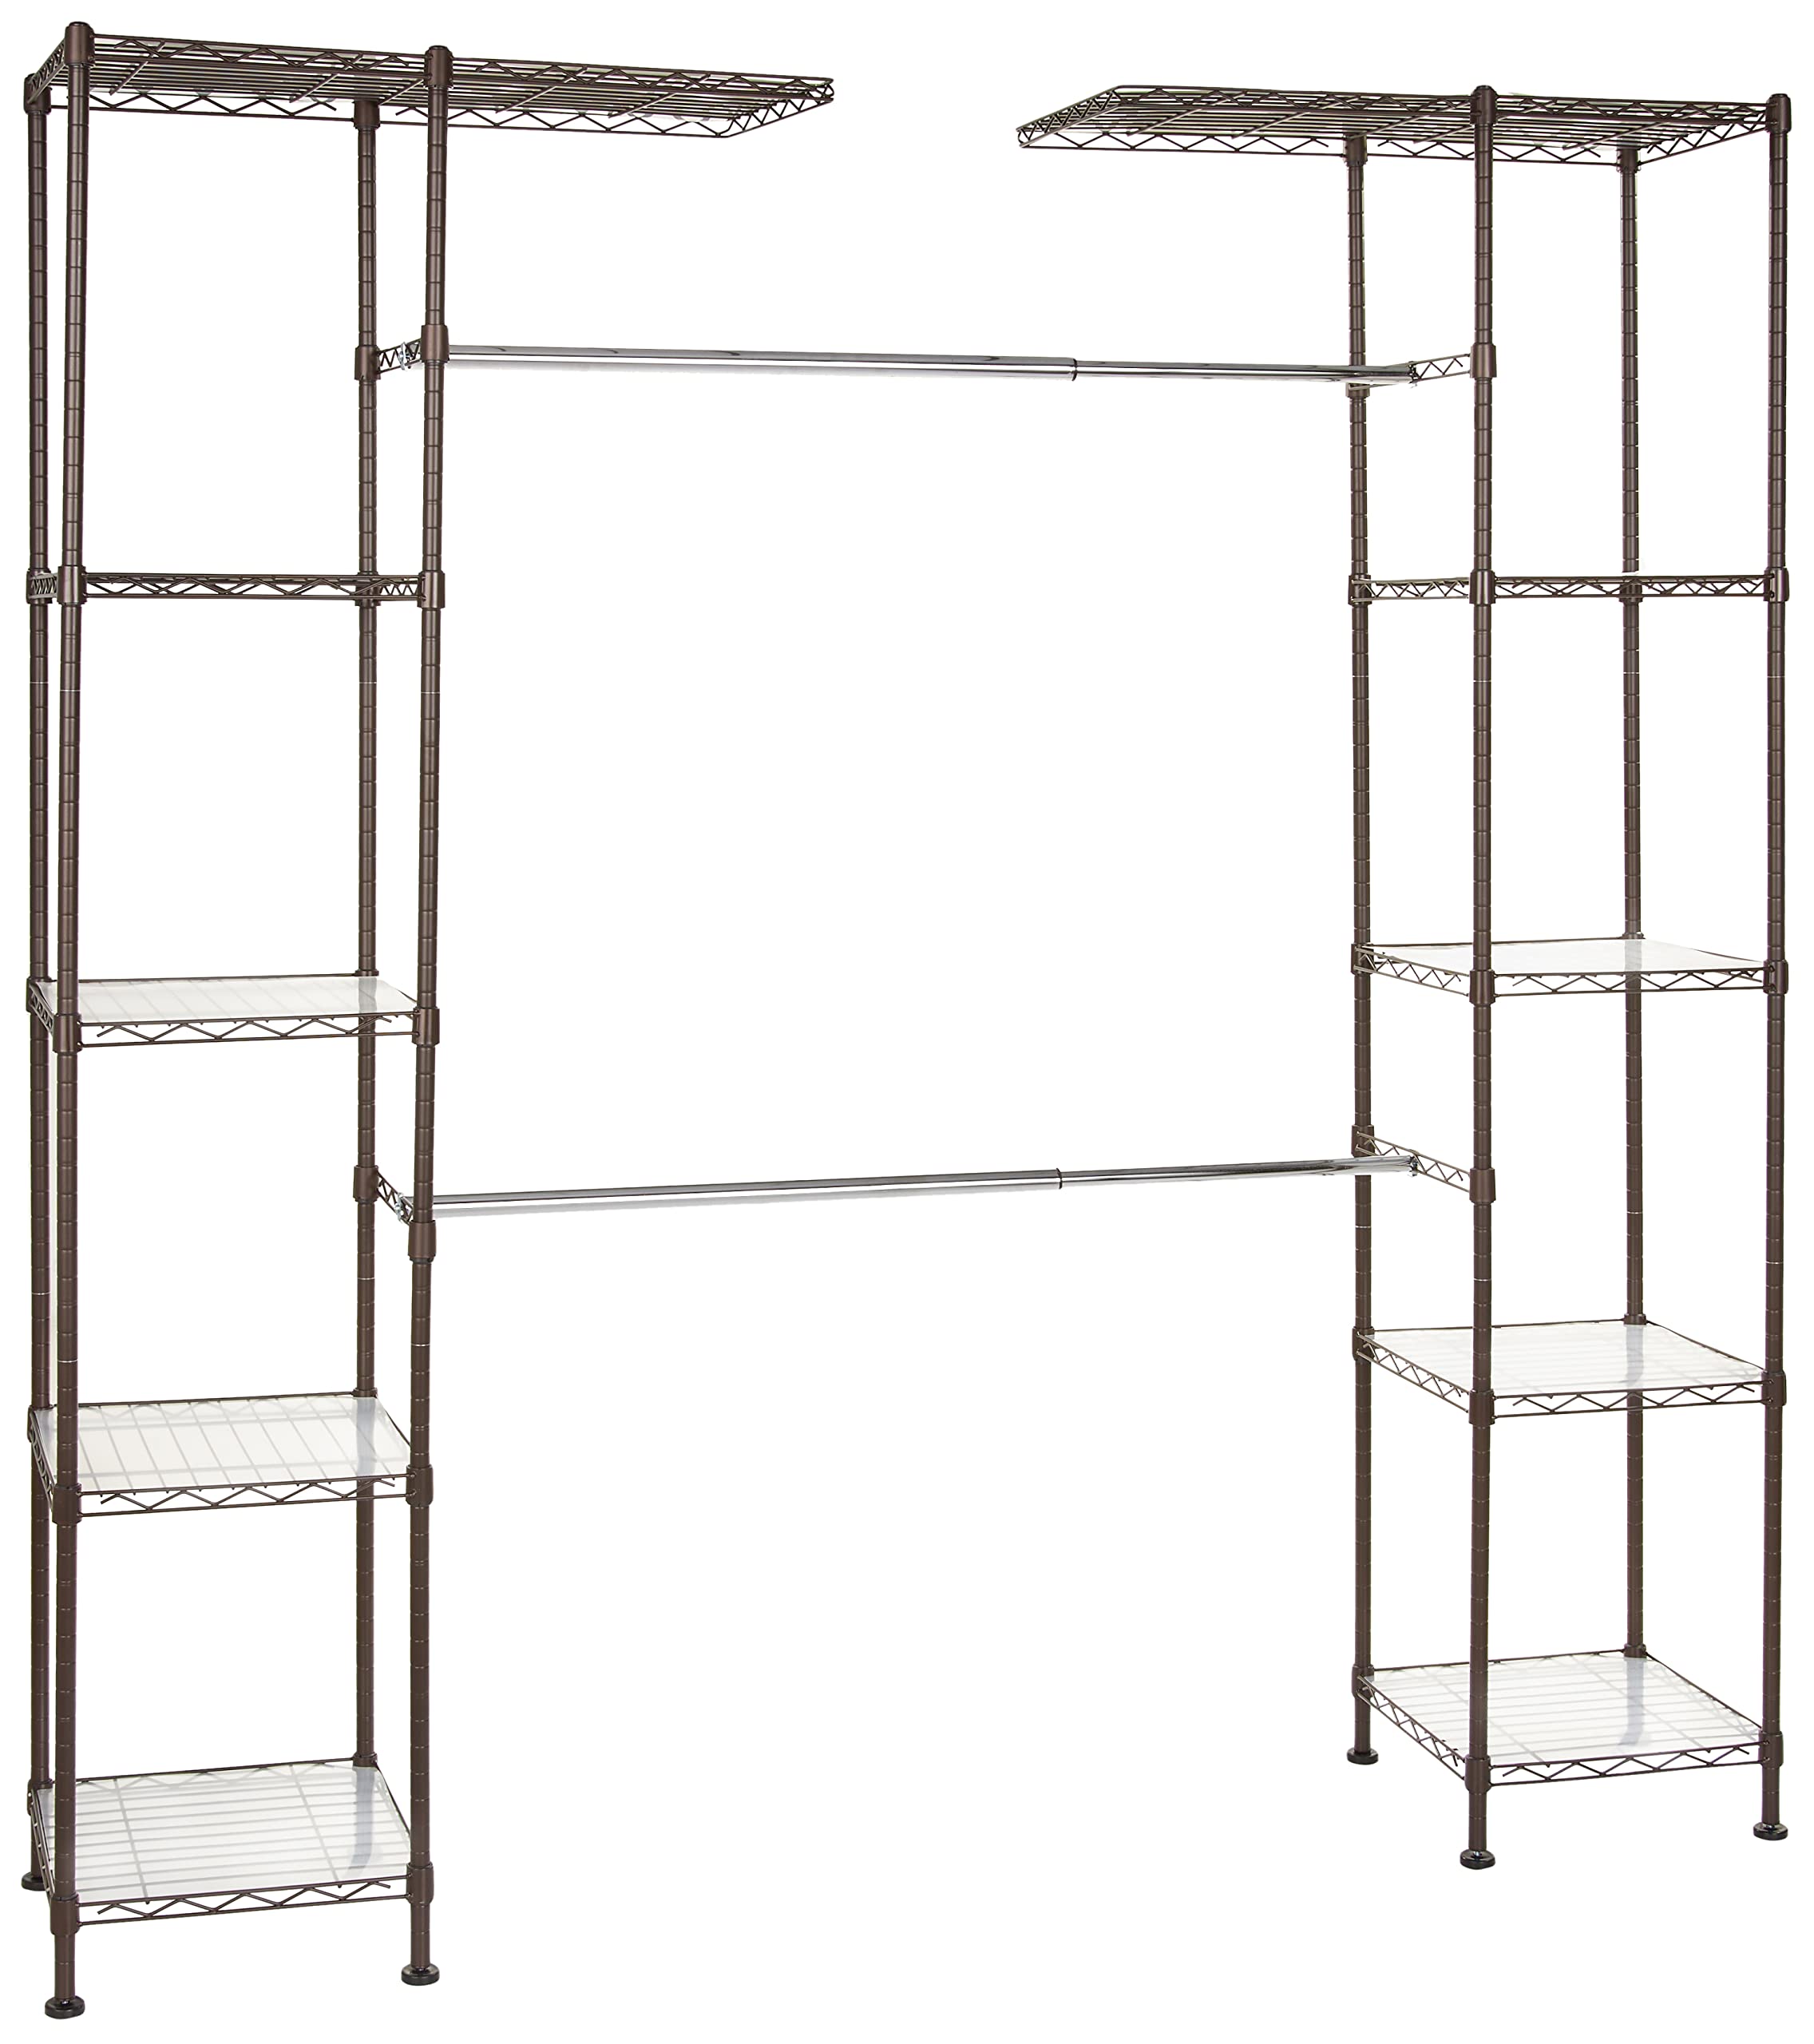 Amazon Basics Expandable Metal Hanging Storage Organizer Rack Wardrobe w/ Shelves (Bronze) $65.20 + Free Shipping